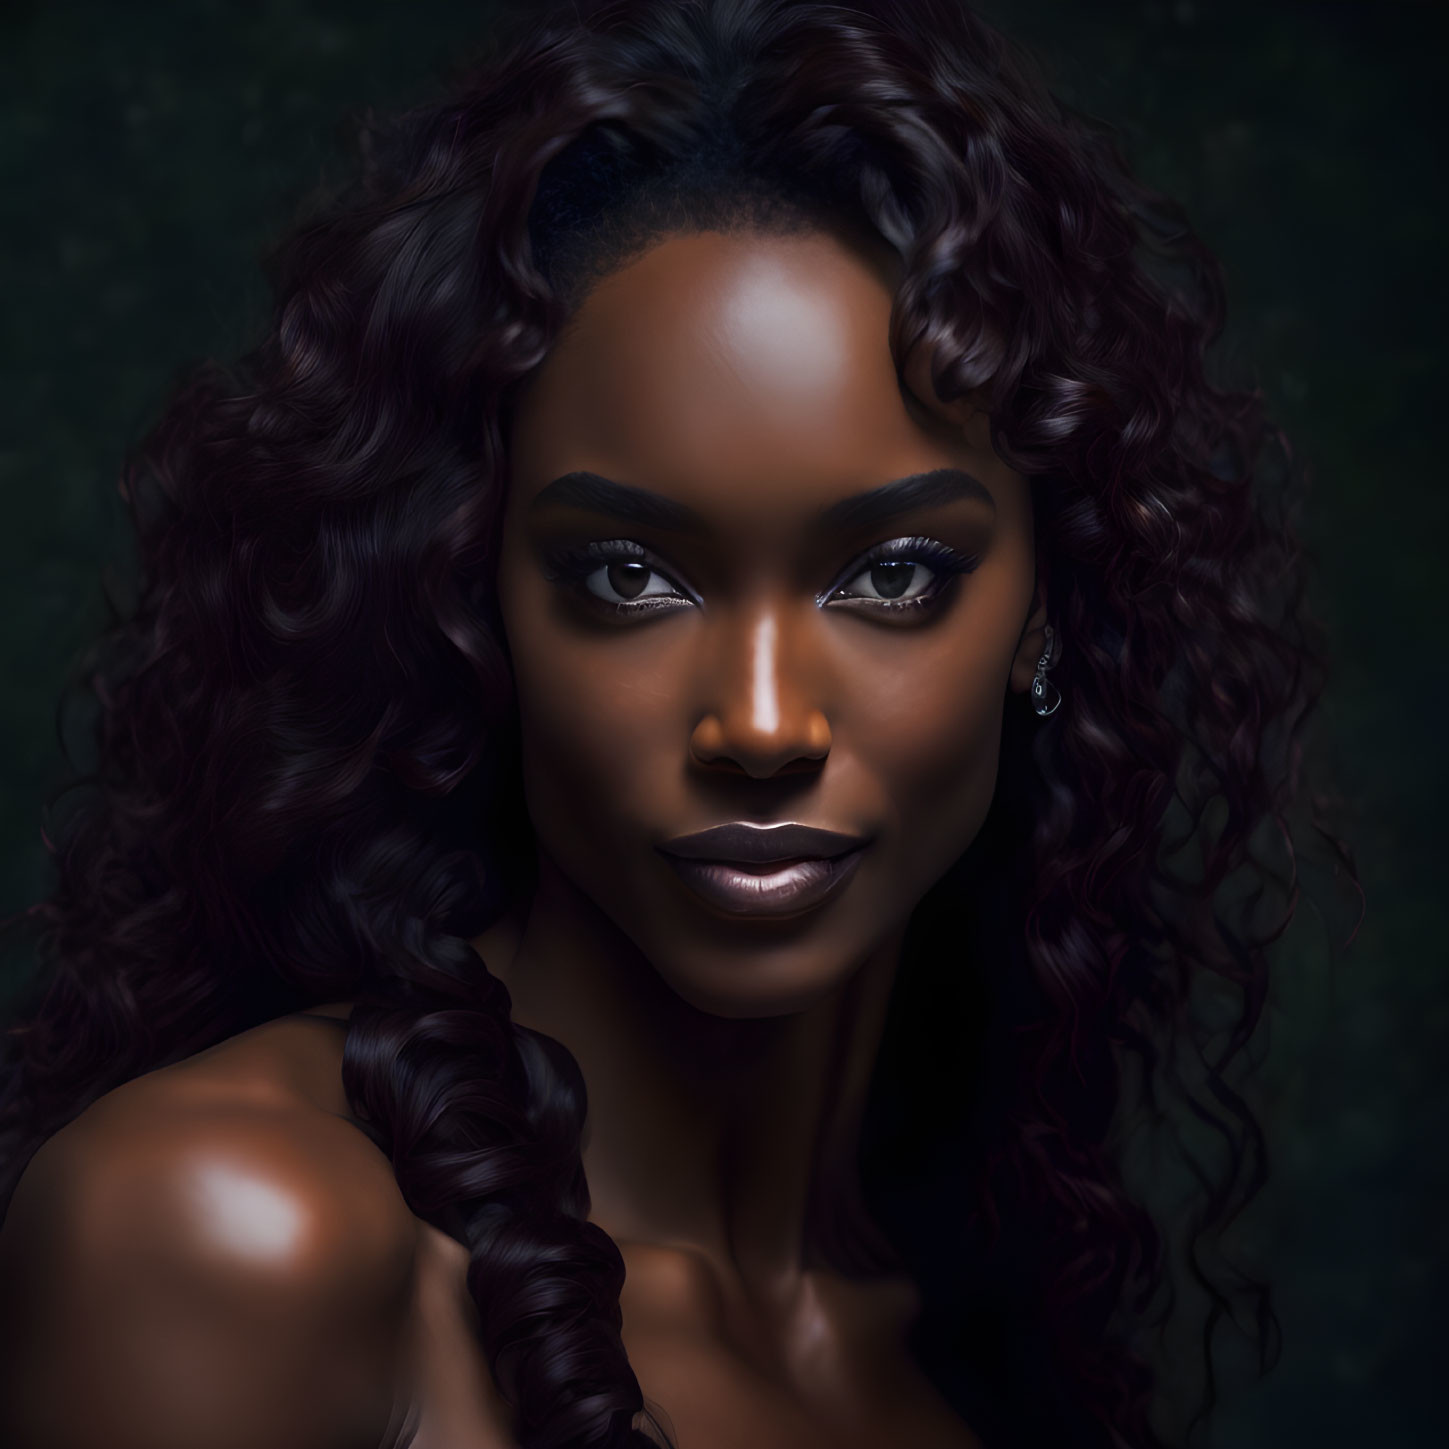 Dark-skinned woman with long, curly hair in striking portrait.